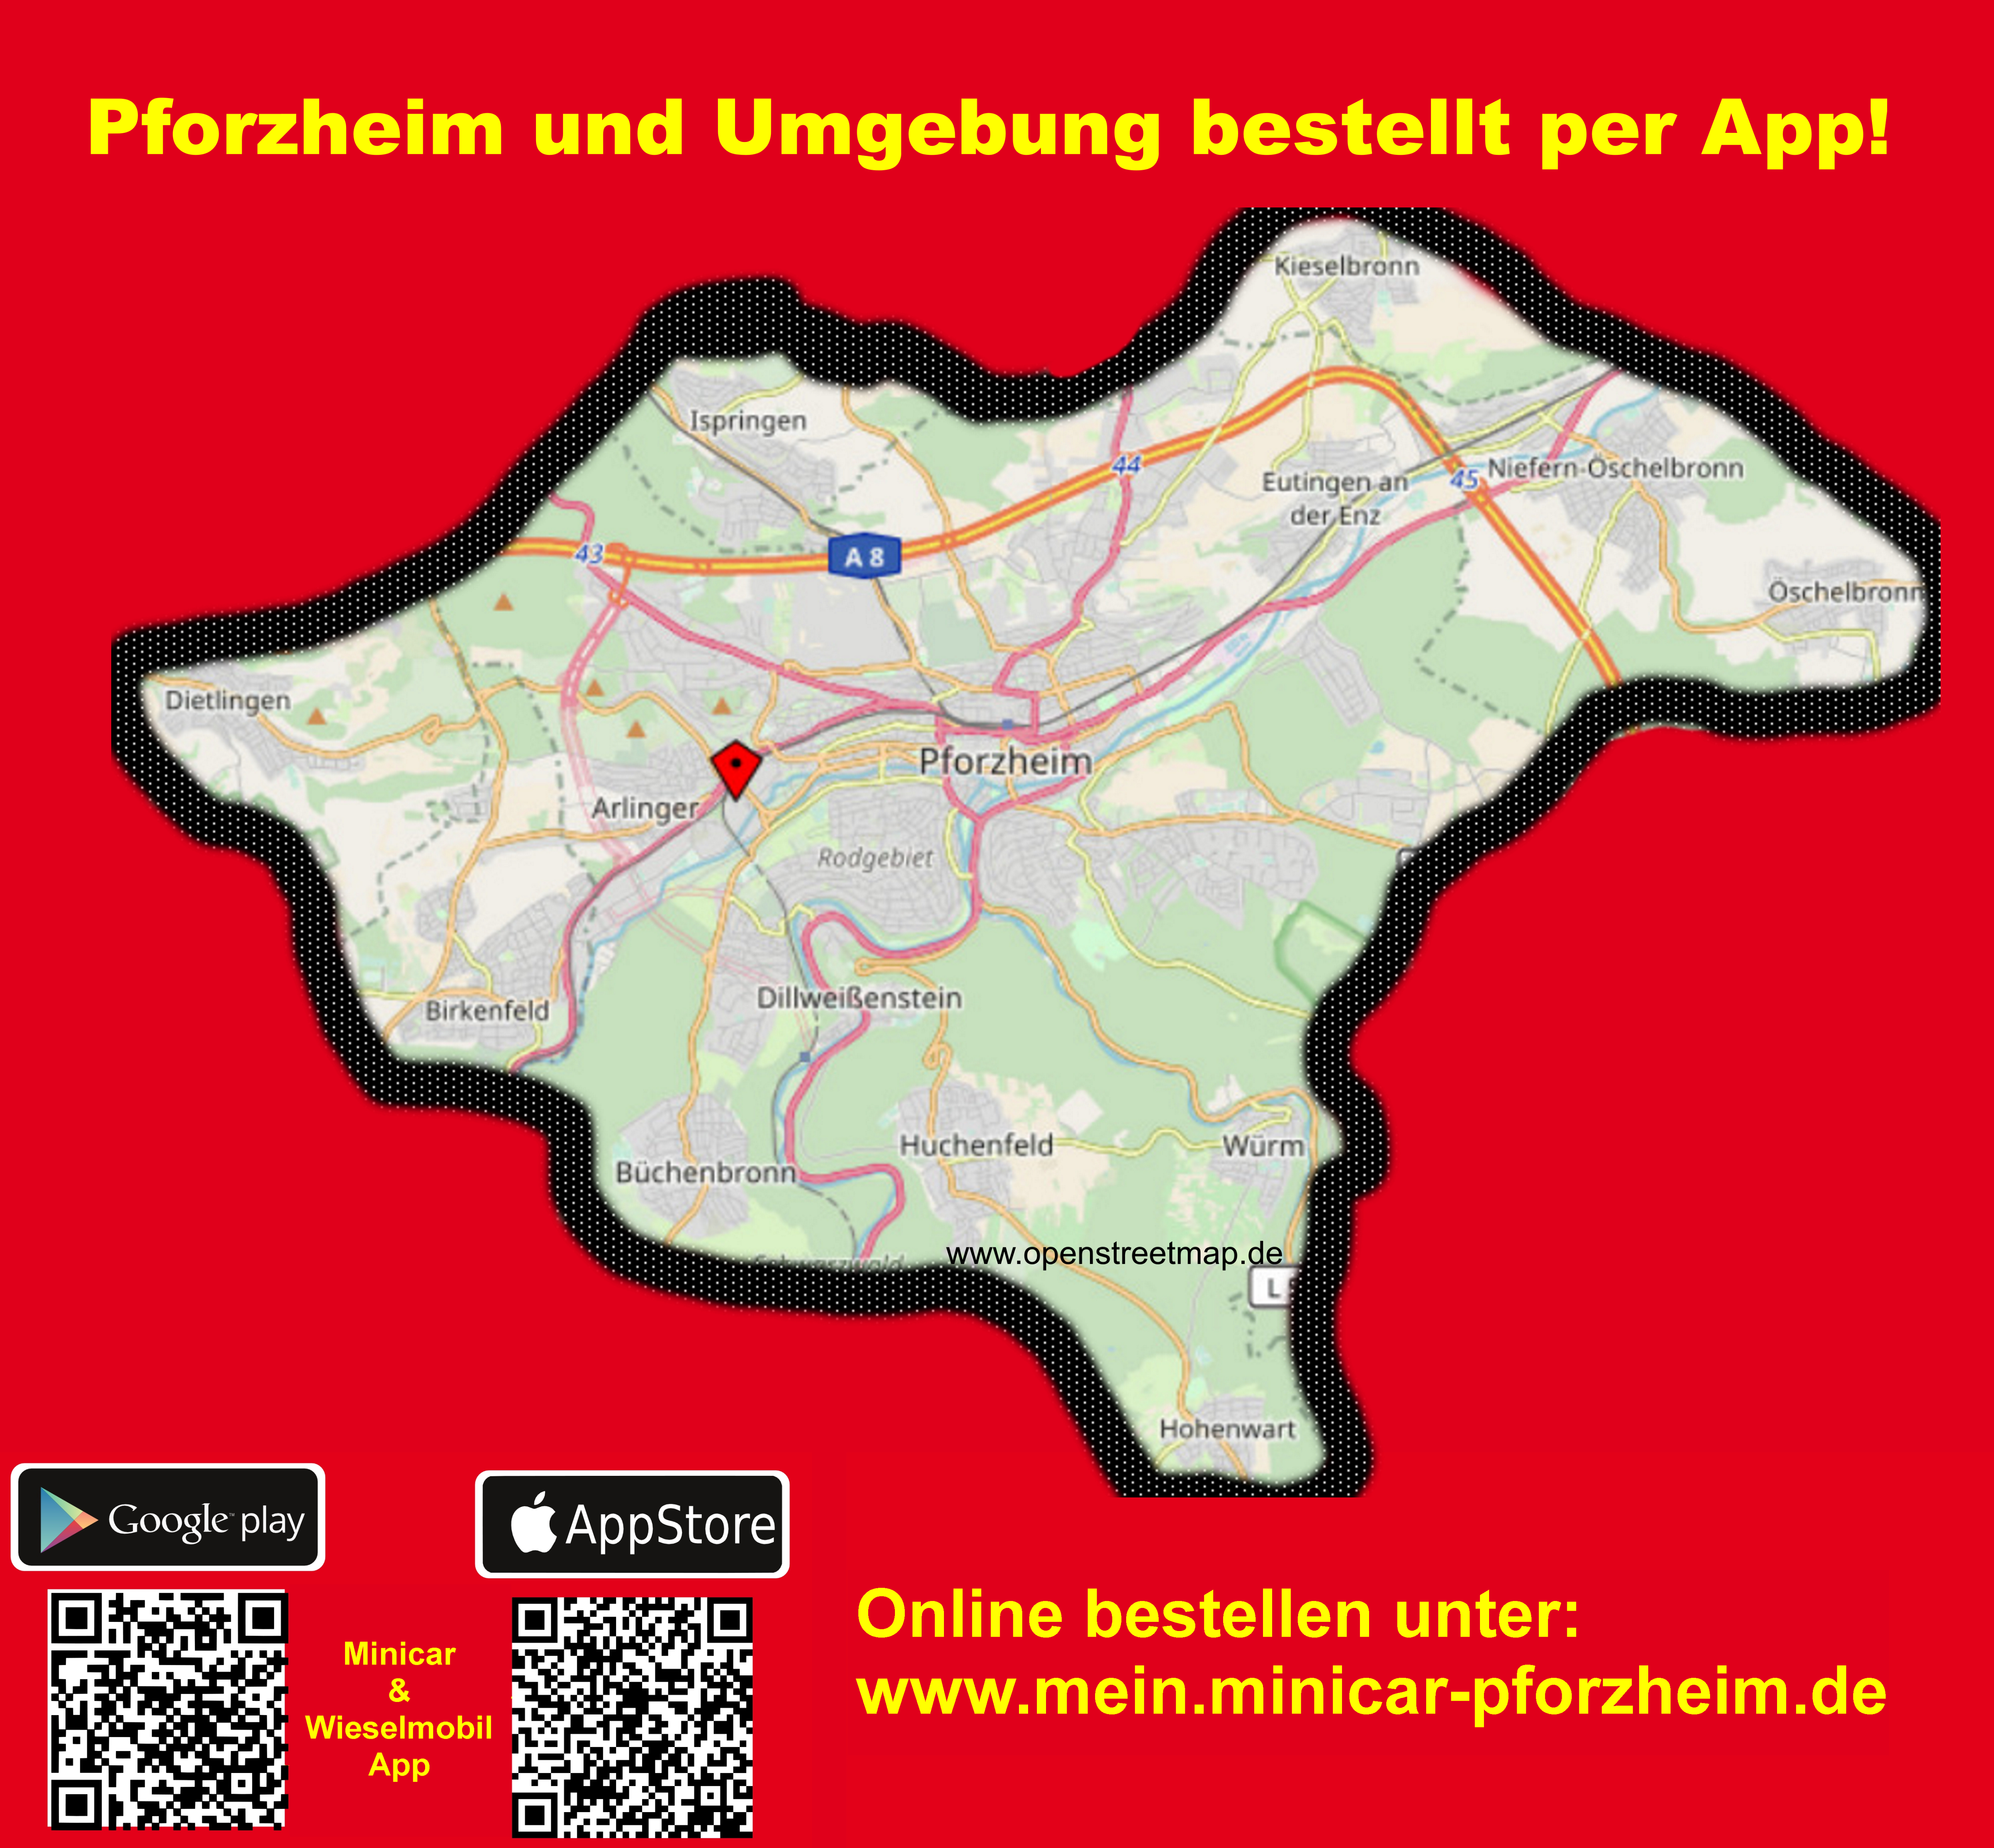 Wieselmobil App im Store downloaden